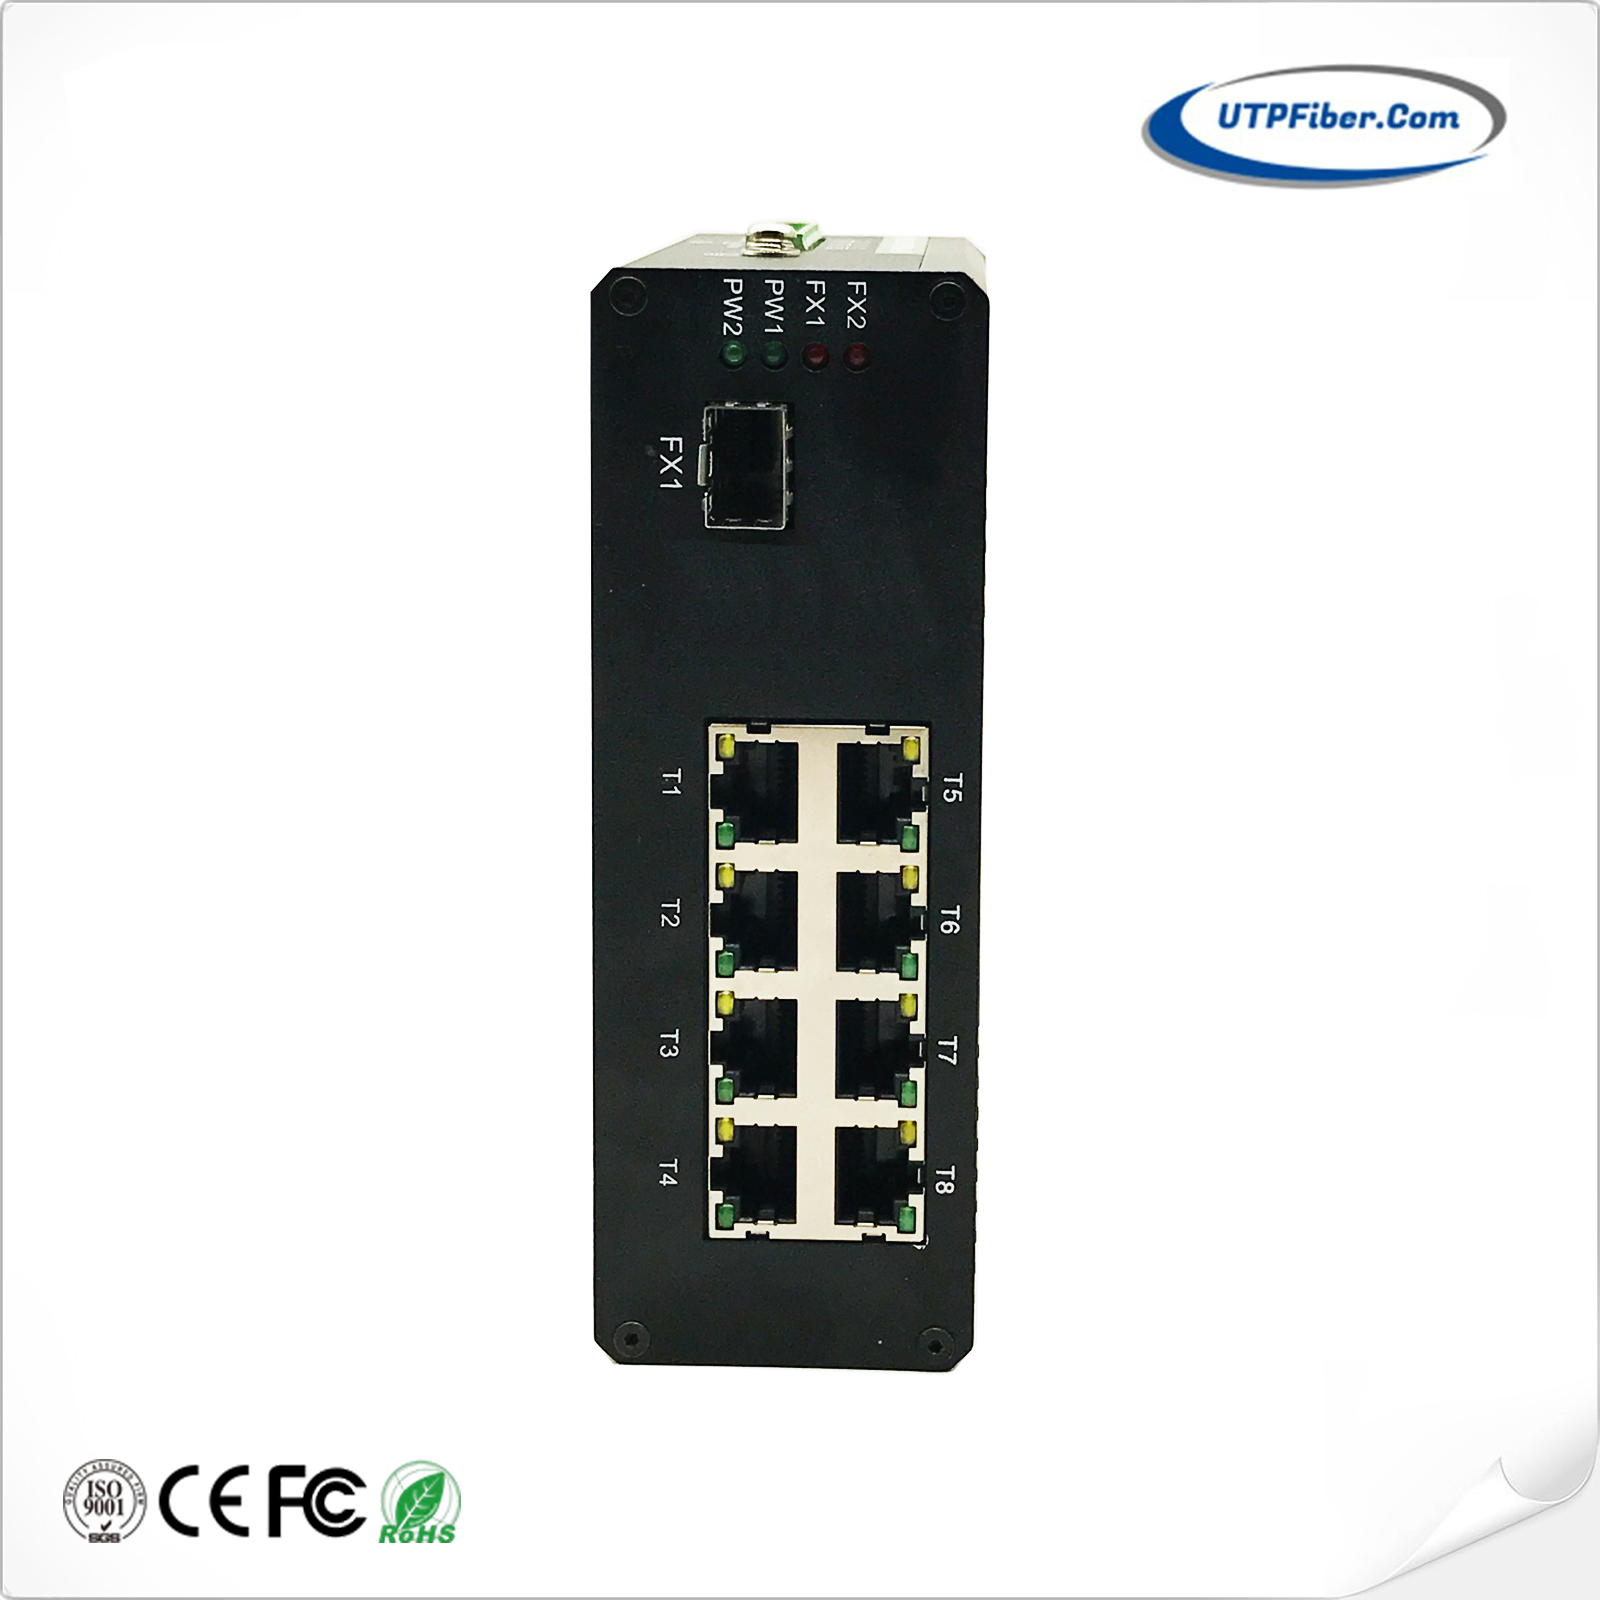 Unmanaged Industrial 8-Port 10/100/1000T 802.3at PoE + 1-Port 1000X Gigabit Ethernet Switch